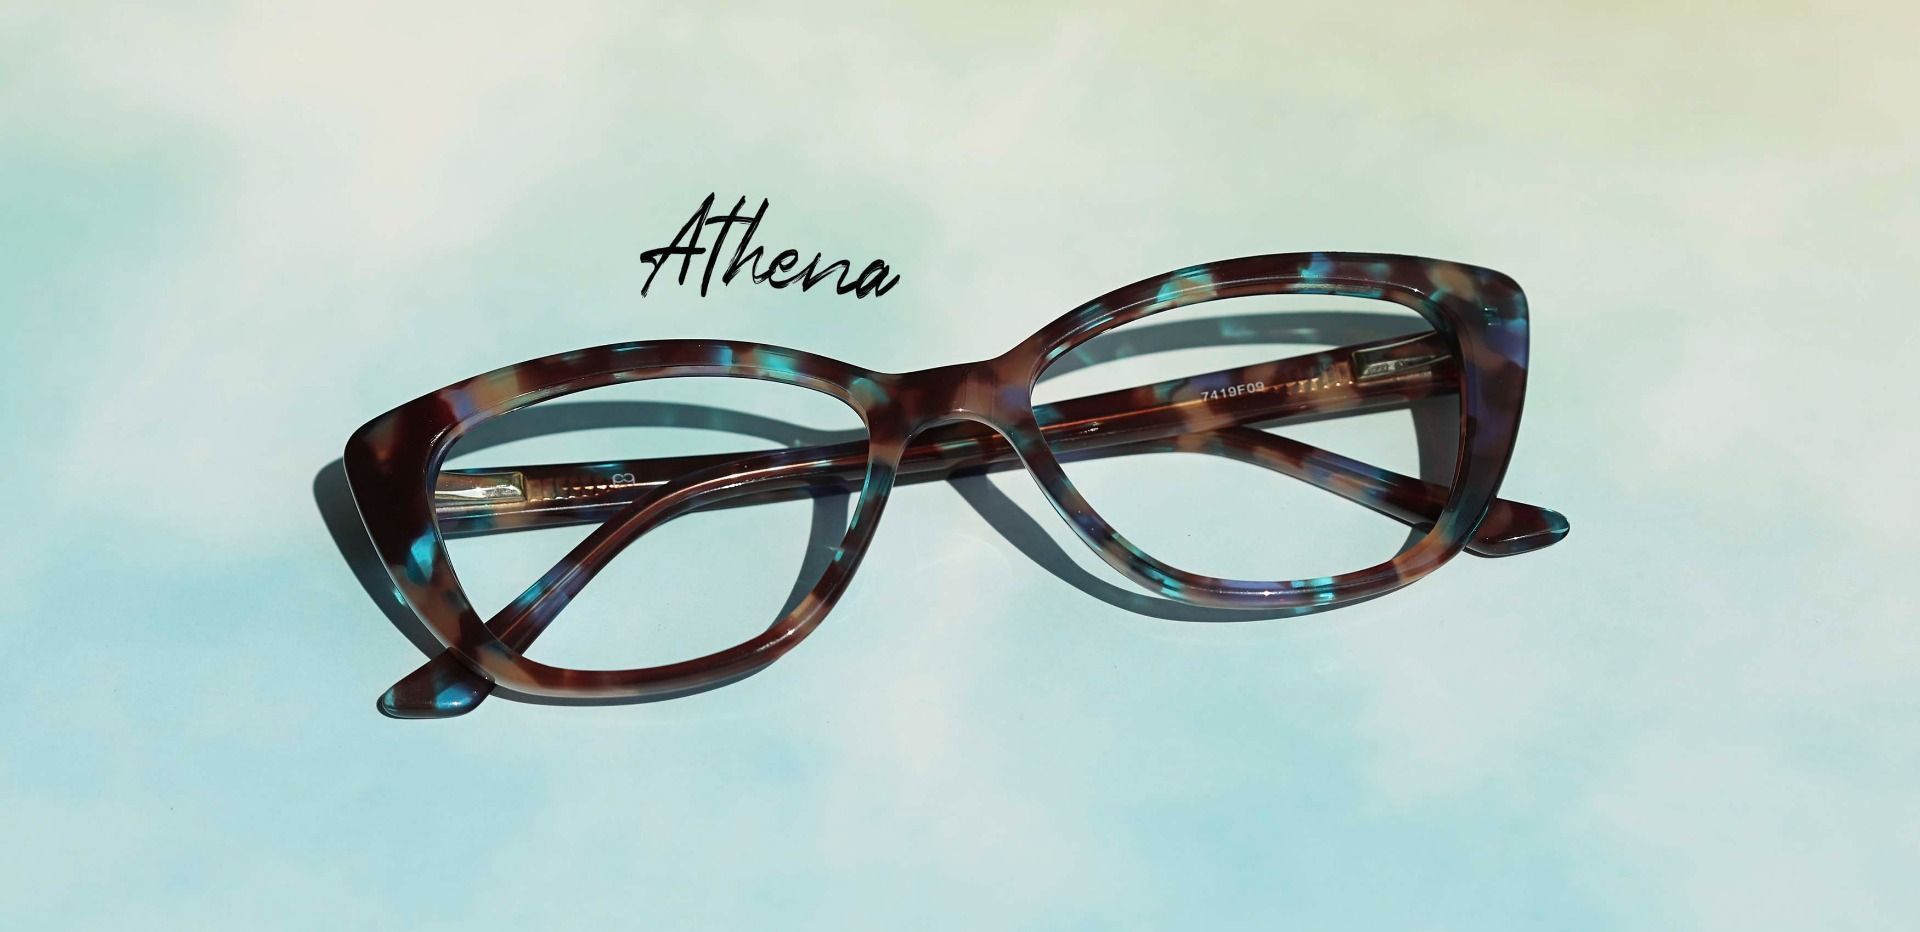 Athena Cat-Eye Prescription Glasses - Floral